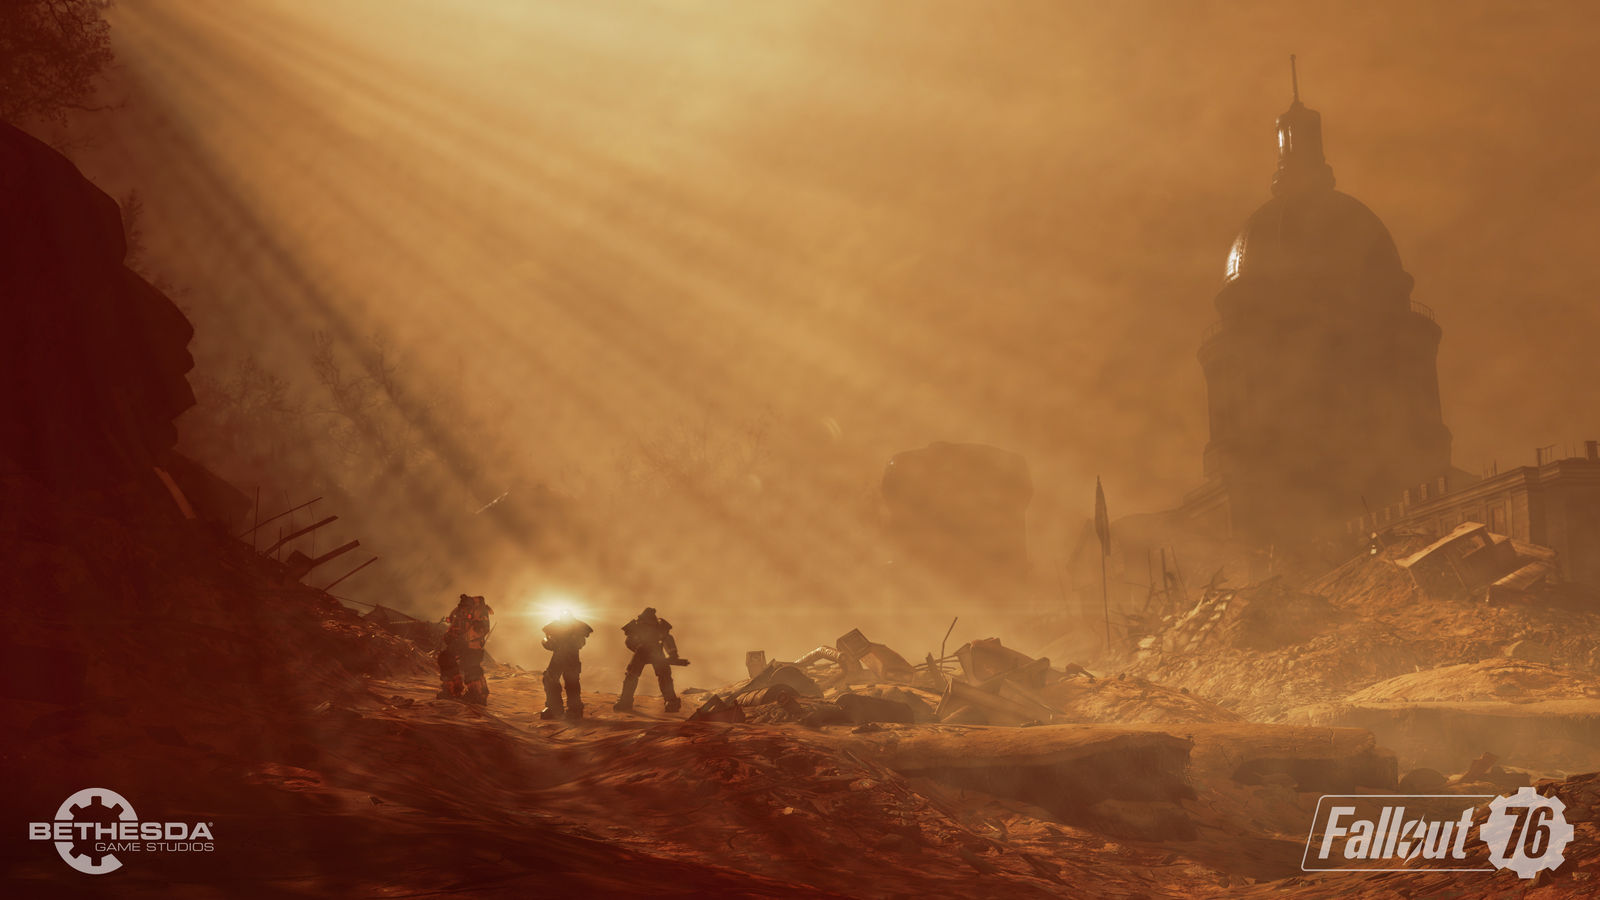 Fallout 76: Steel Dawn Deluxe Edition (Steam) RU/CIS